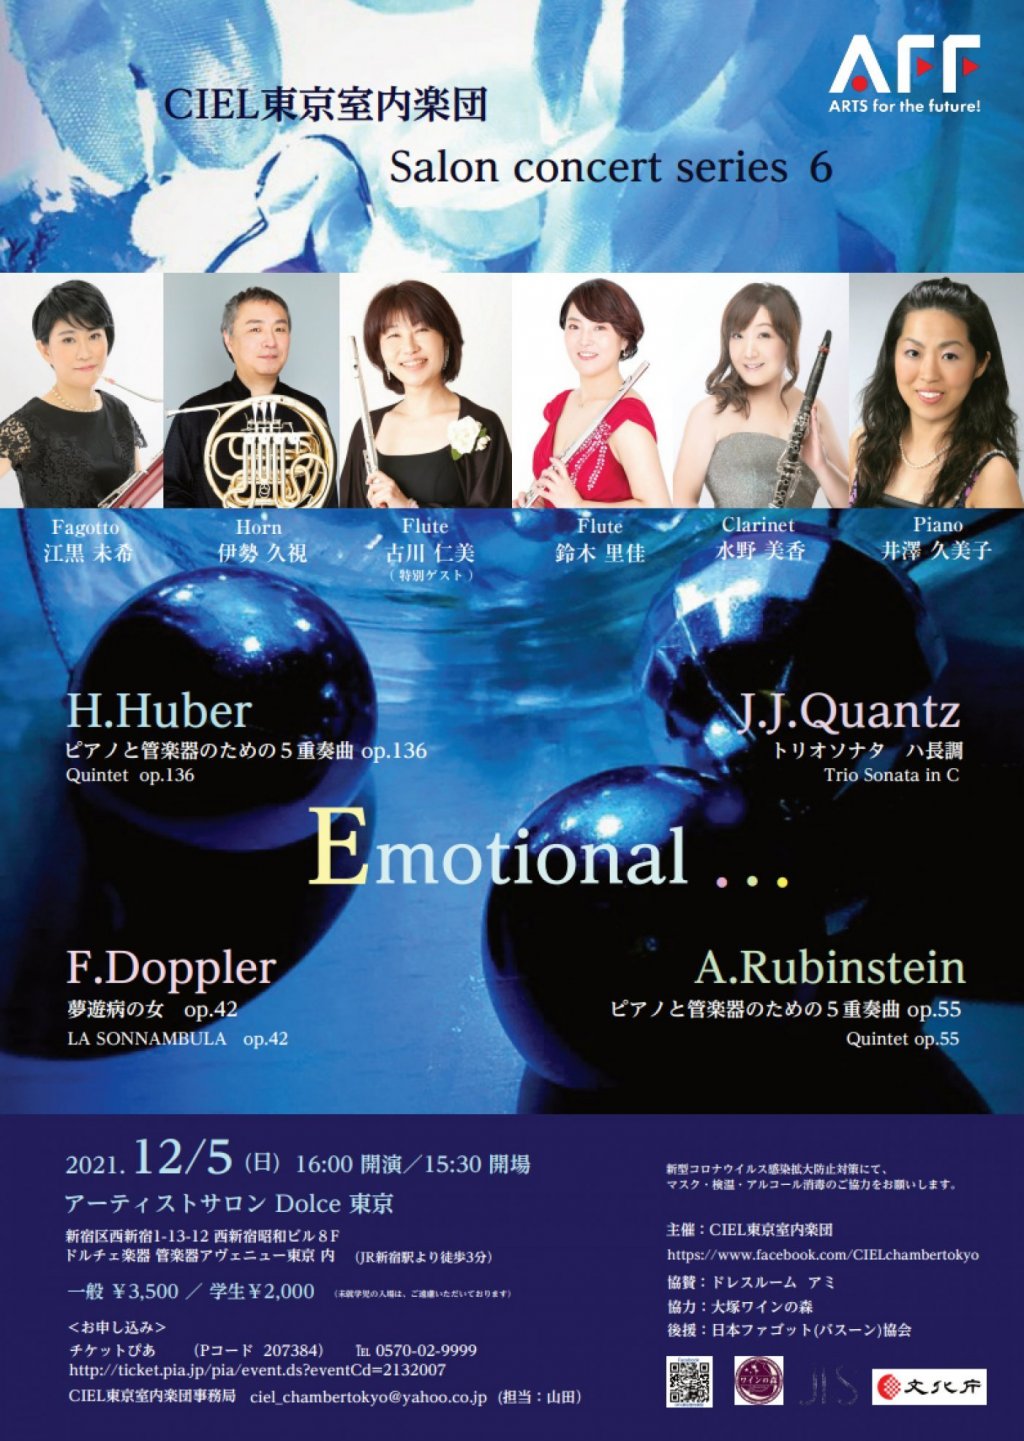 CIEL東京室内楽団 Salon concert series 6　「Emotional」